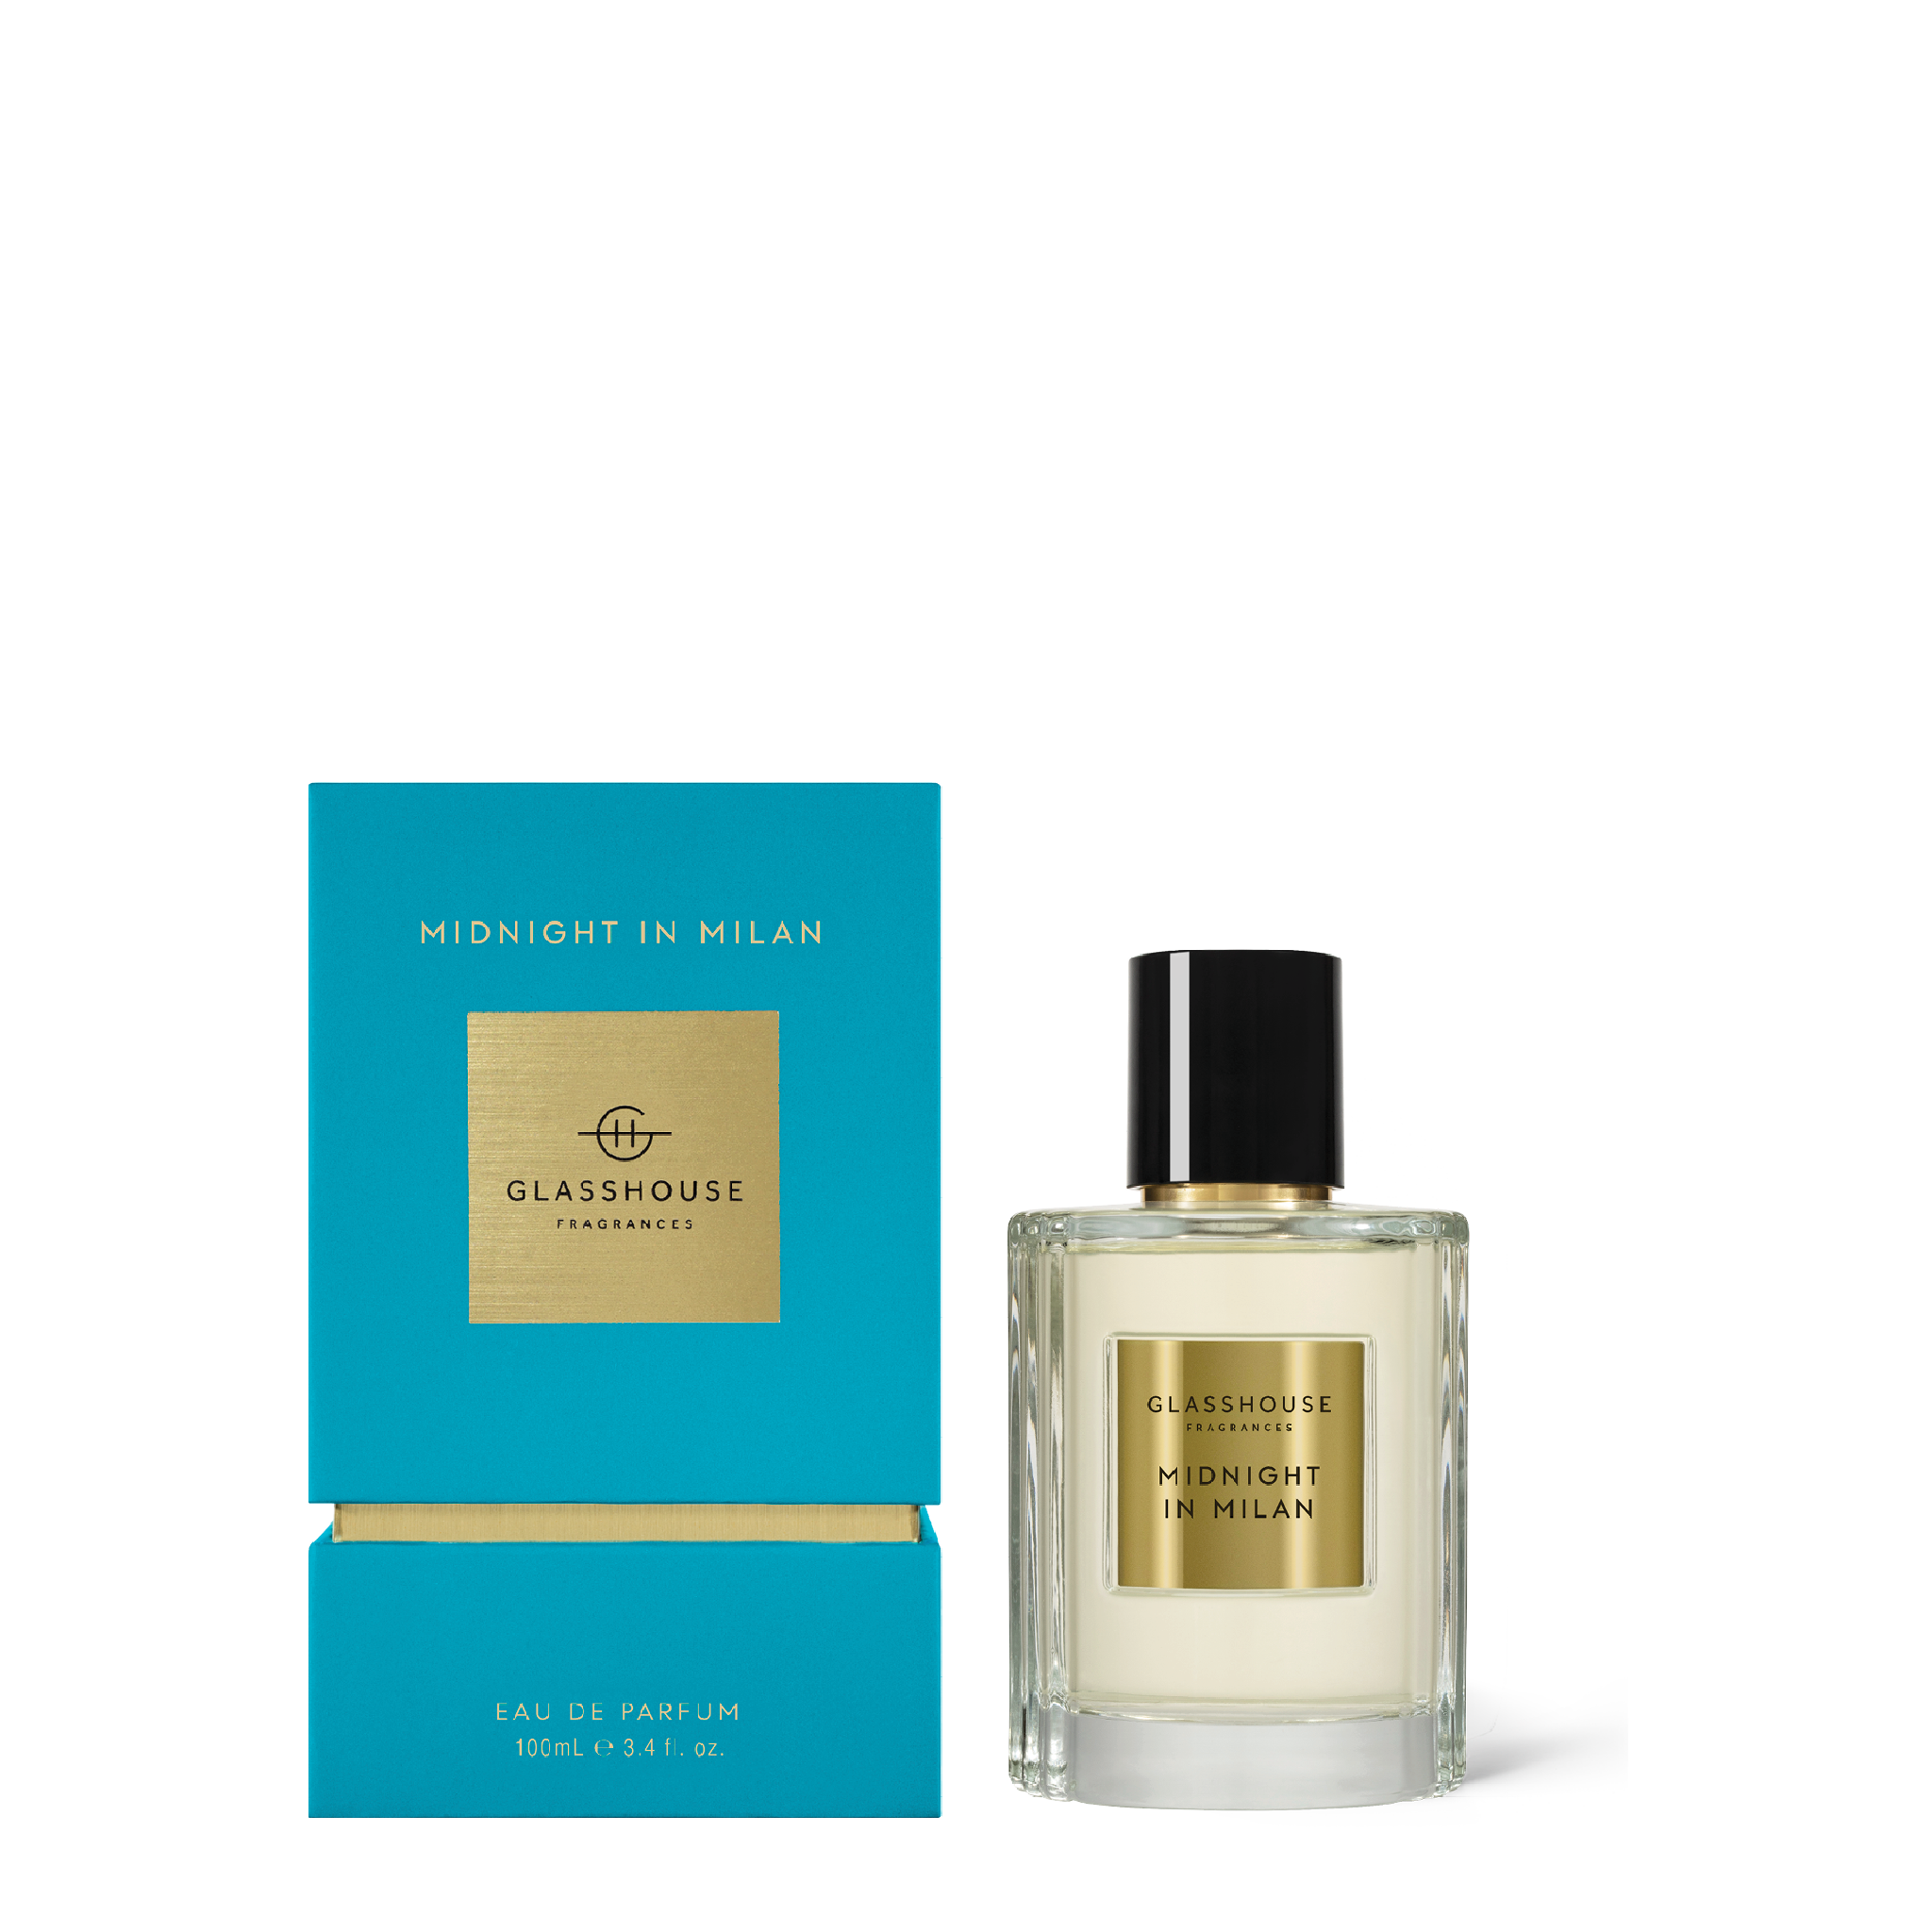 Glasshouse Fragrances Midnight in Milan Saffron and Rose 100mL Eau de Parfum with box